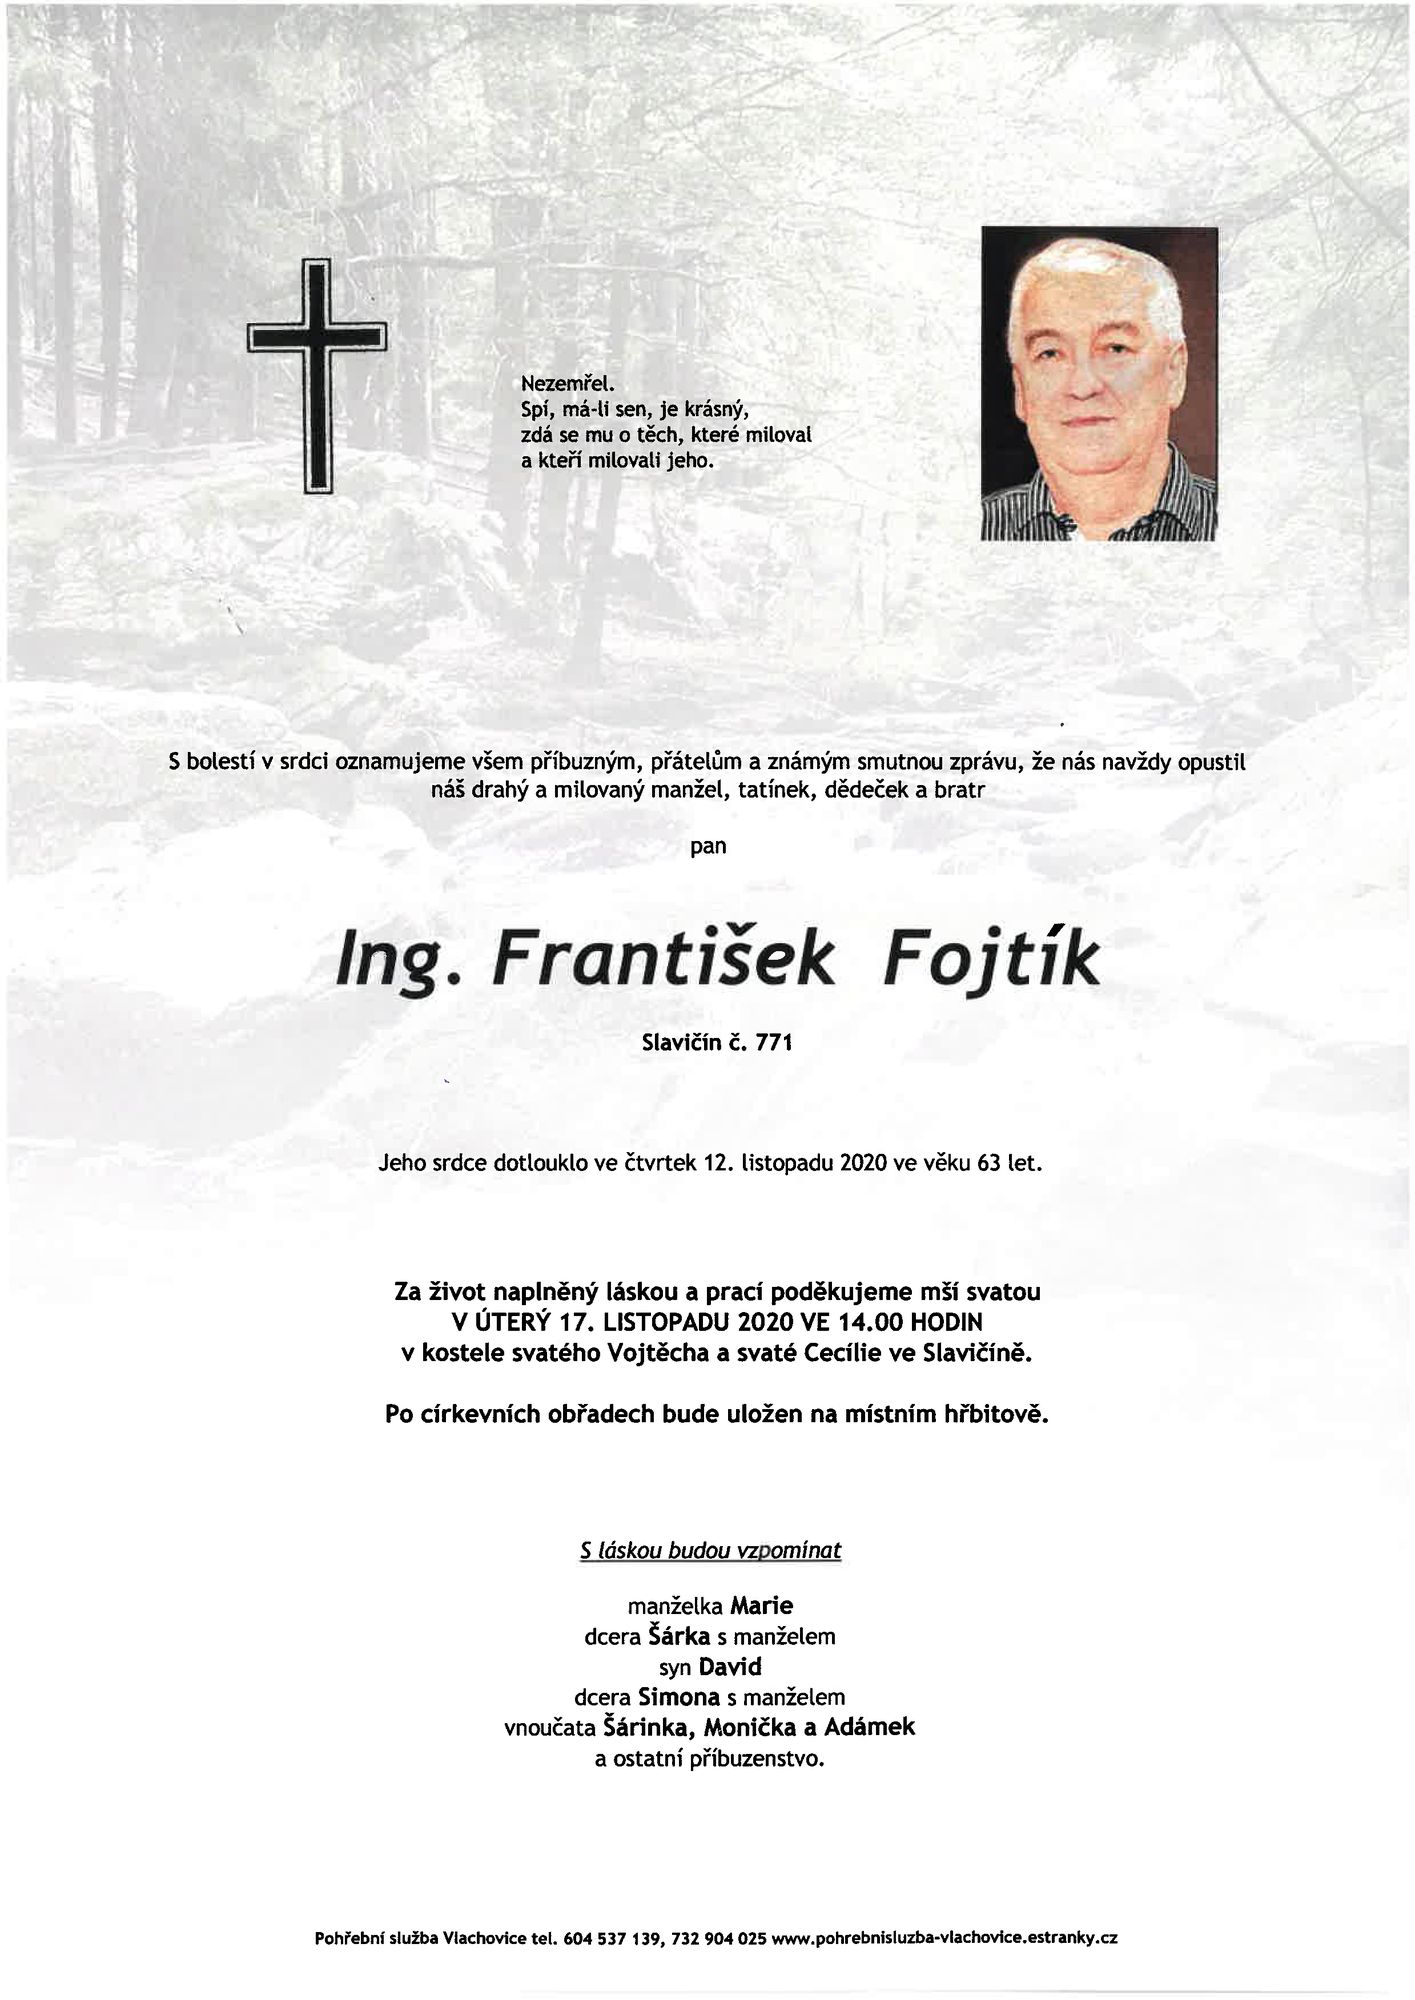 Ing. František Fojtík